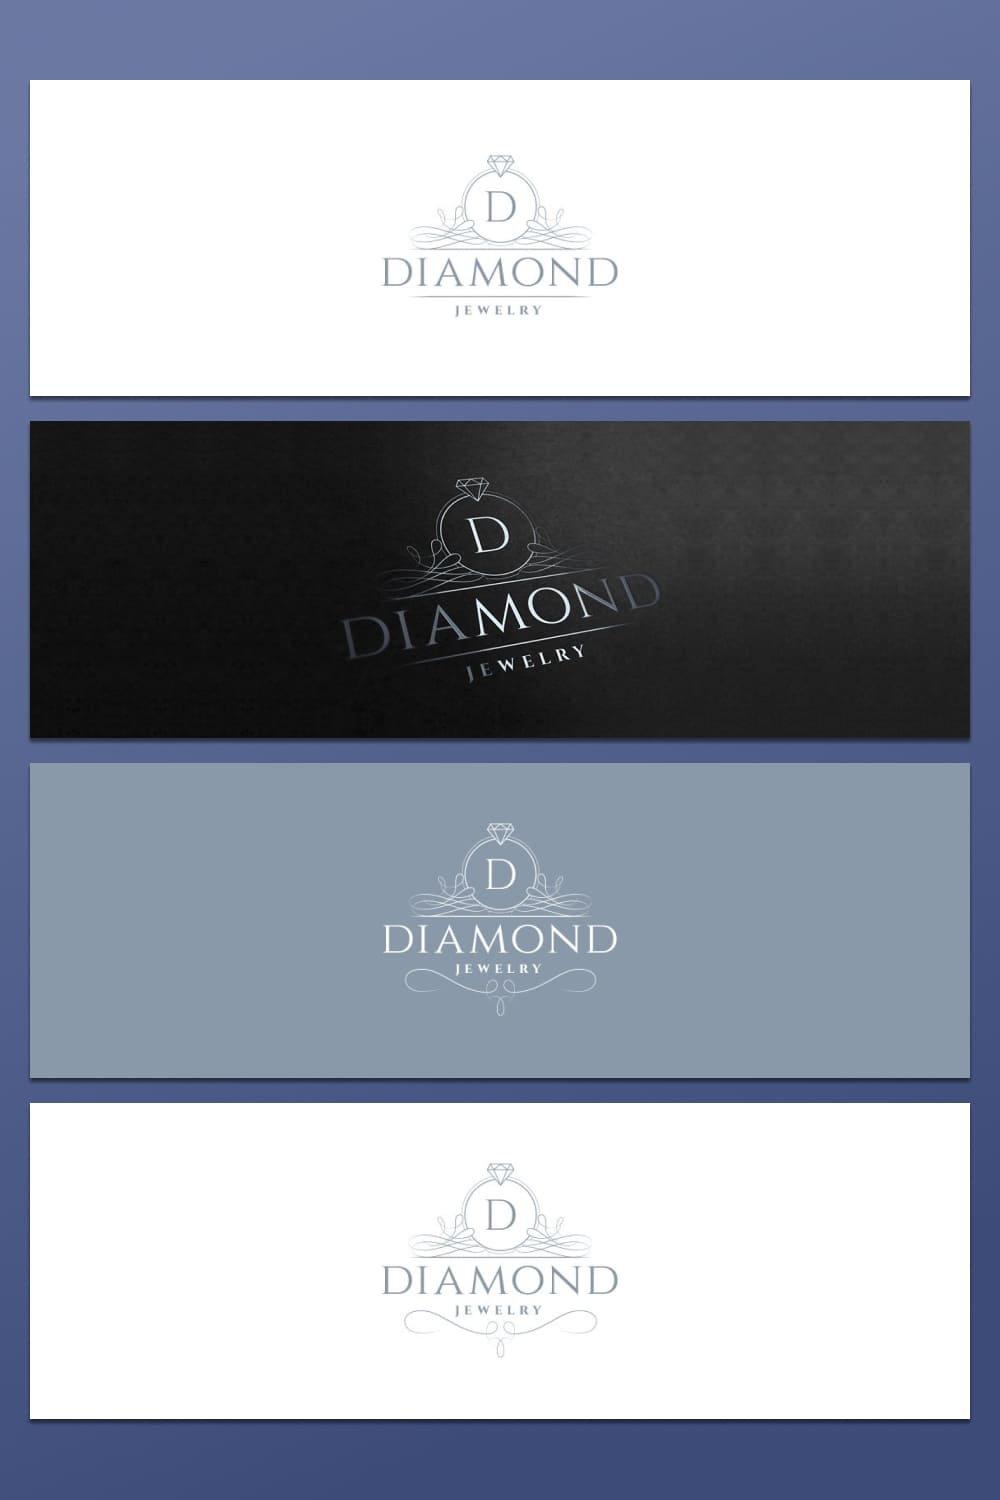 diamond jewelry logo for bright jewelry design.